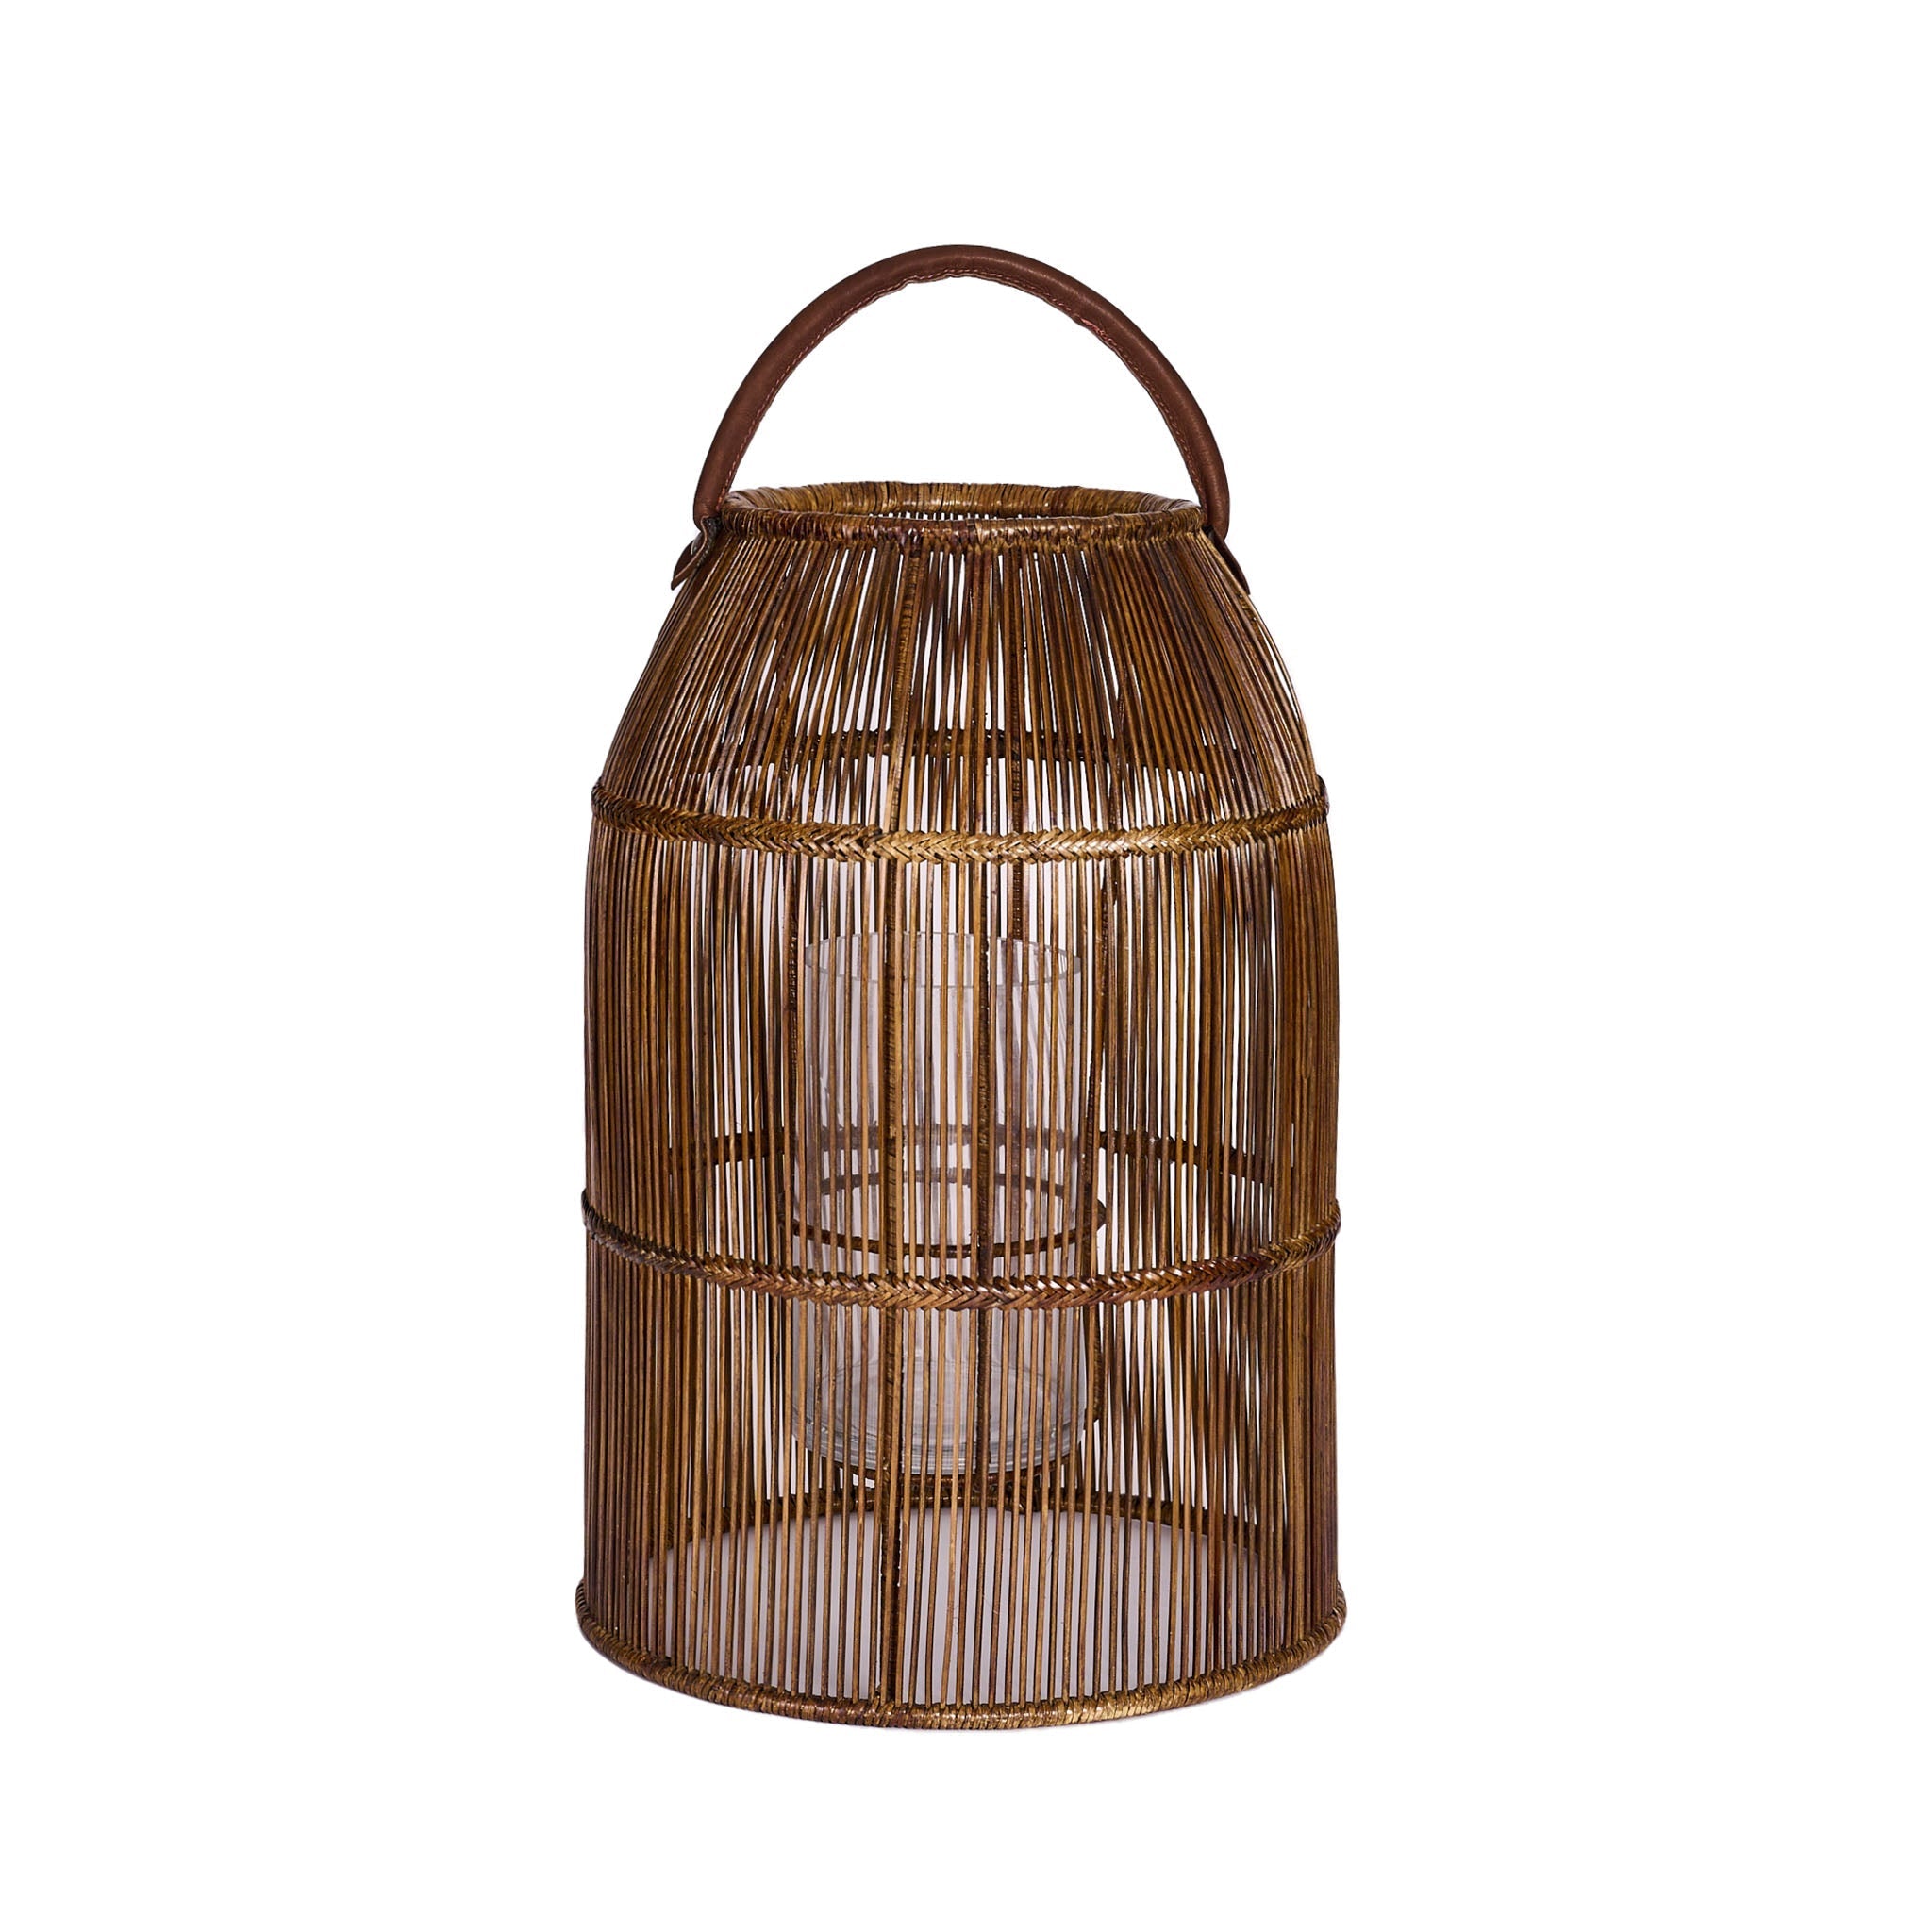 Lanterna Rangoon in rattan e bambù naturale